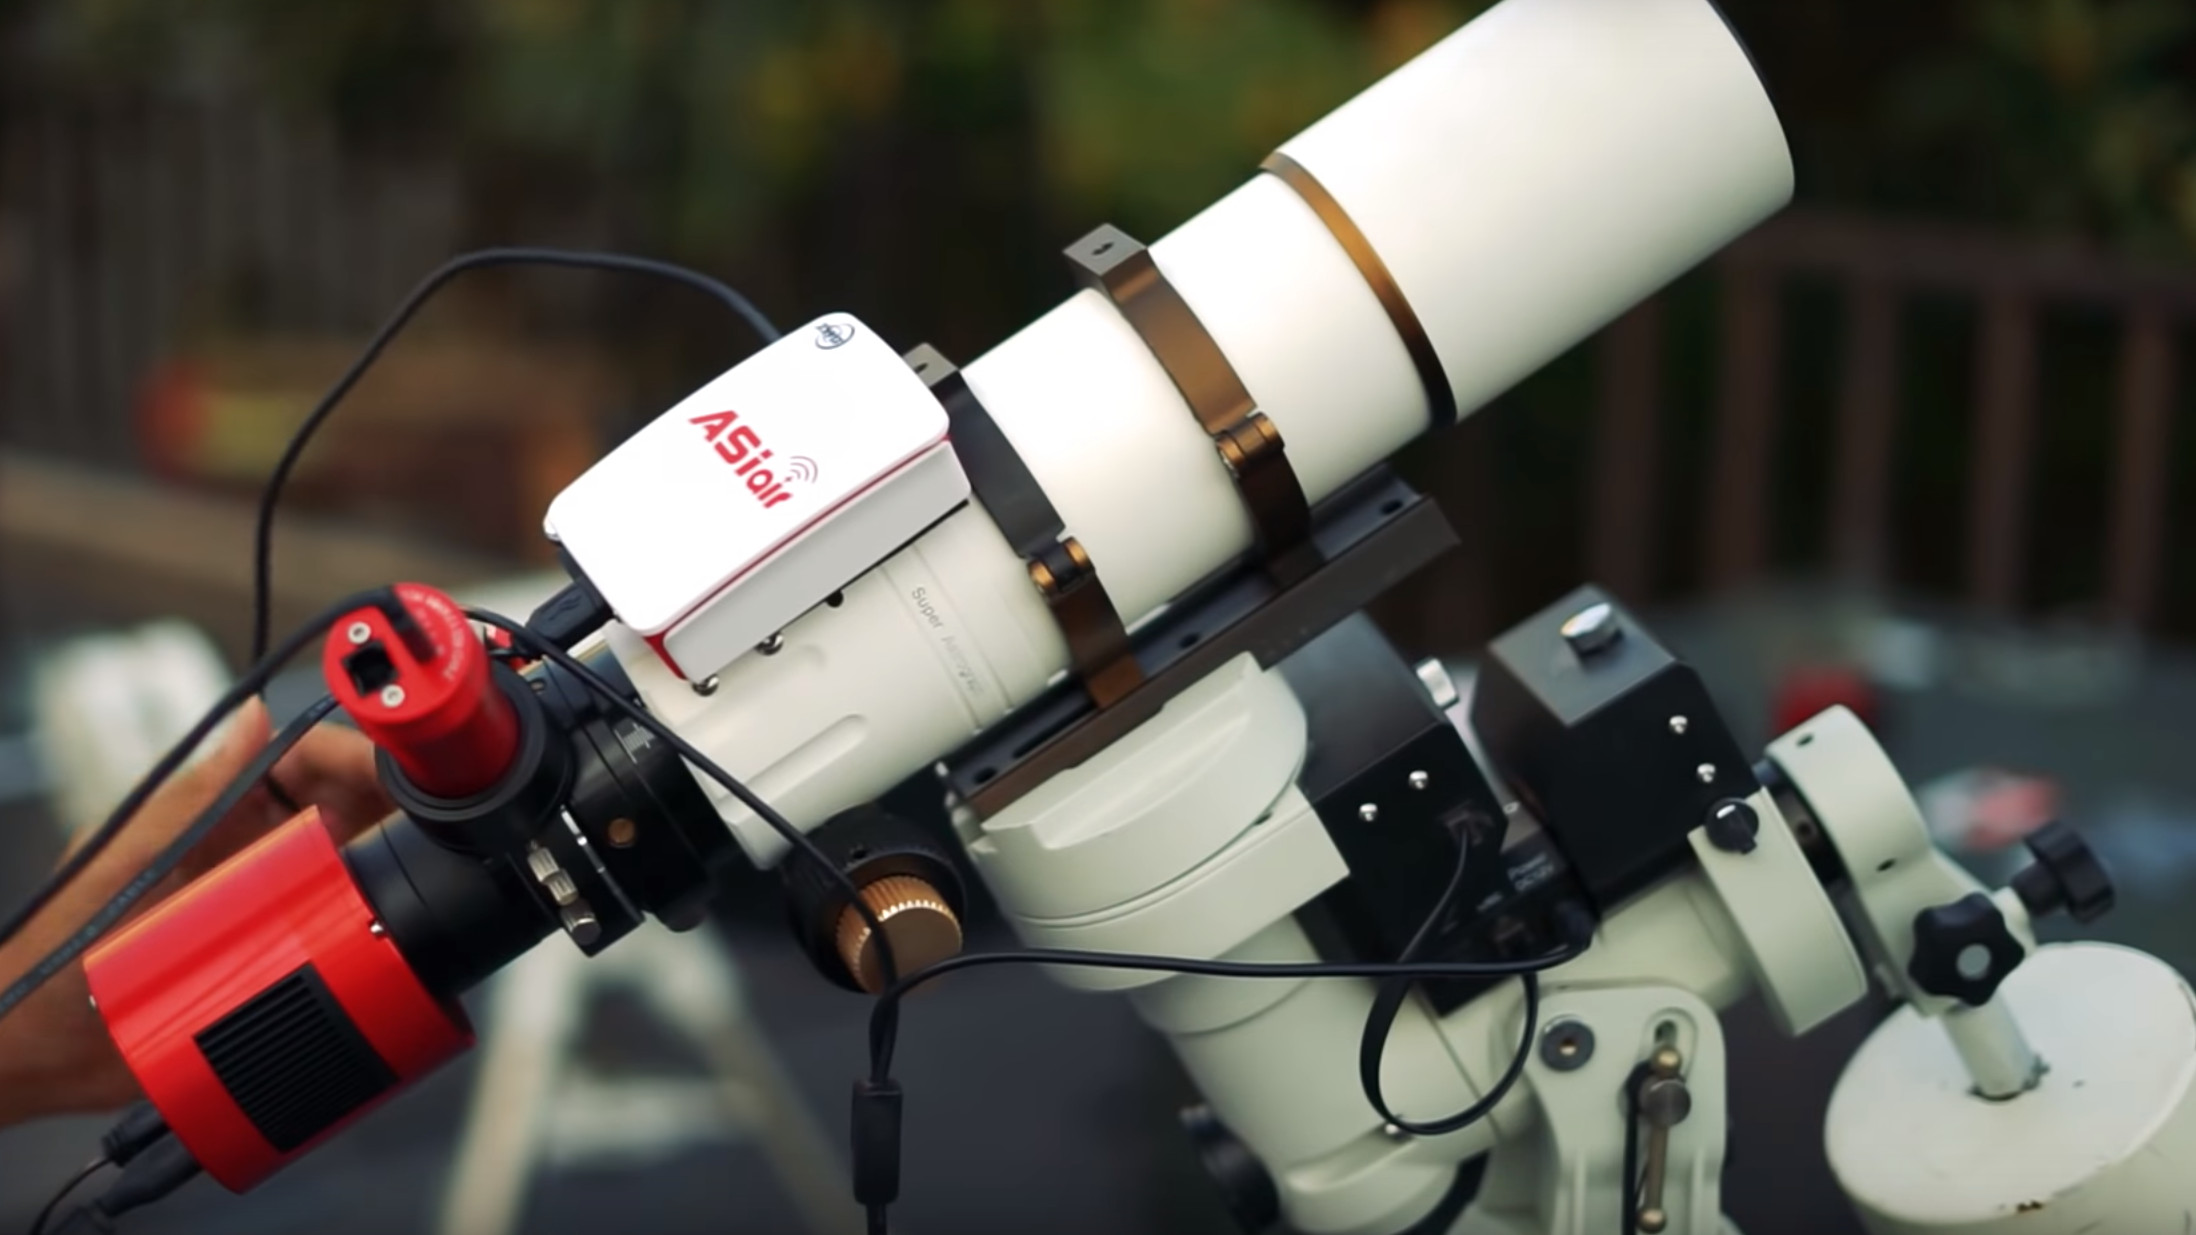 Autoguiding with a telescope